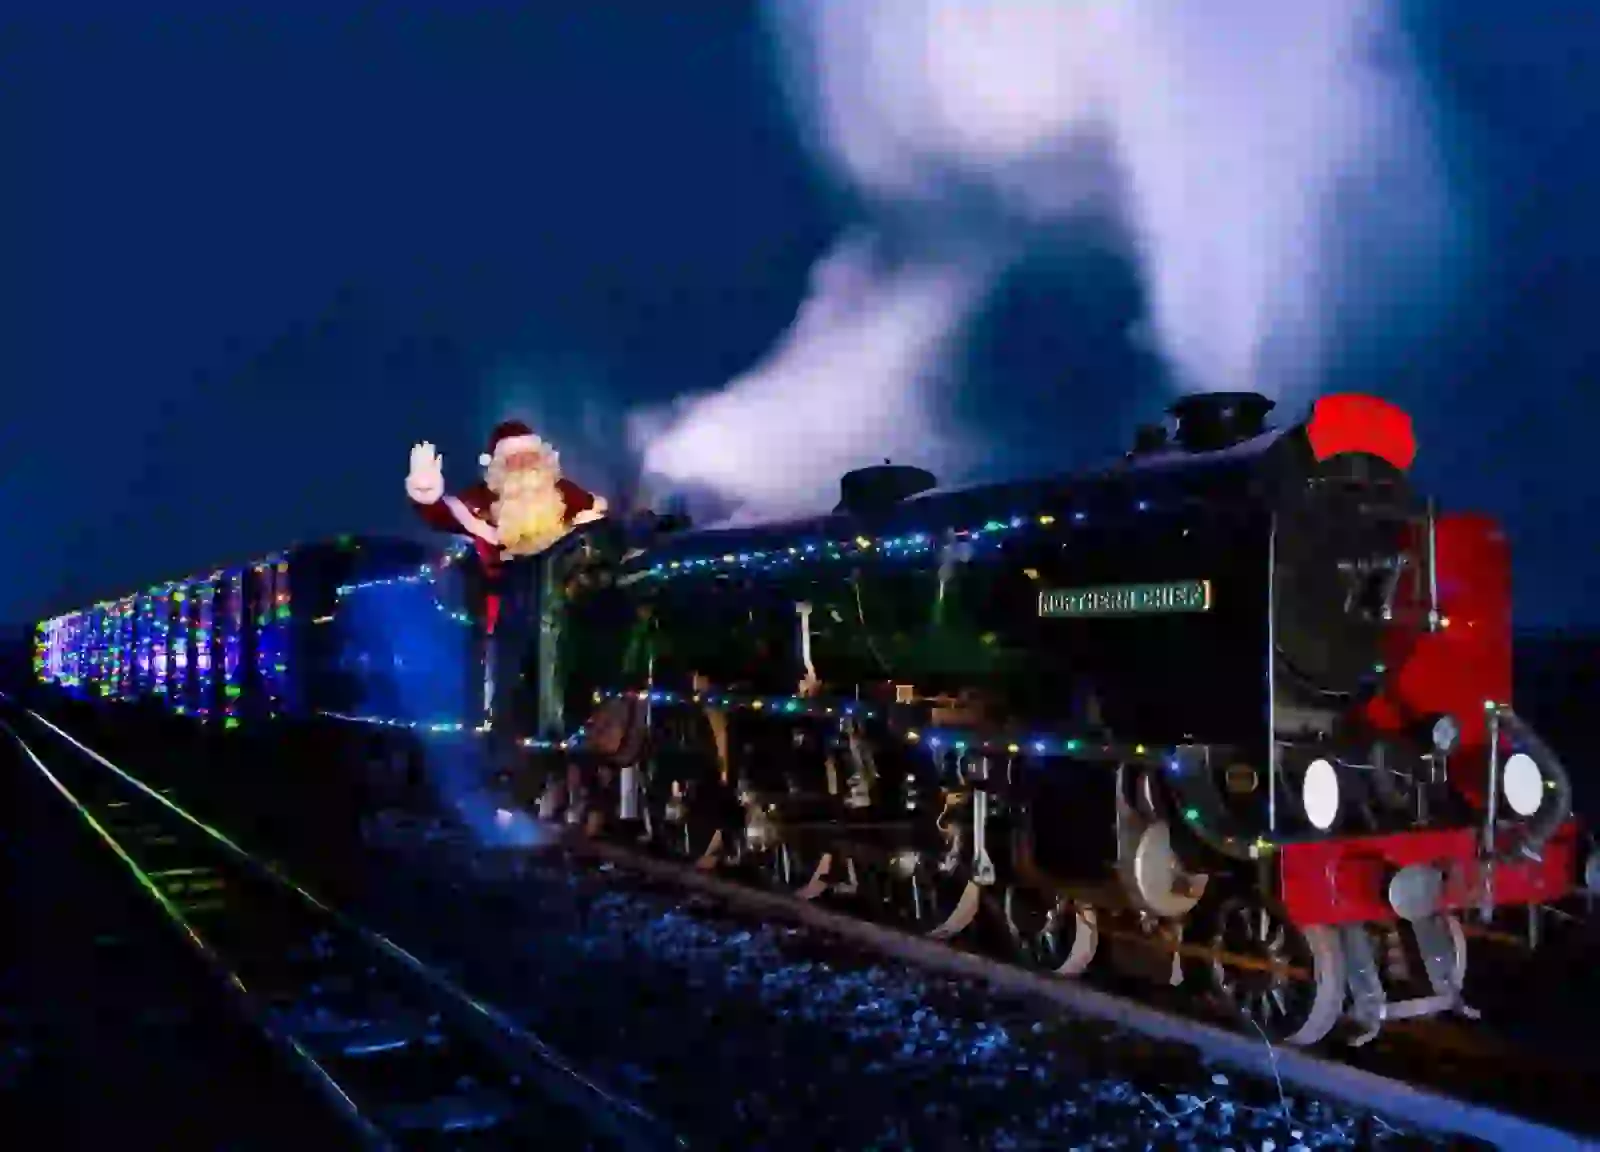 Night time Christmas train ride with Santa